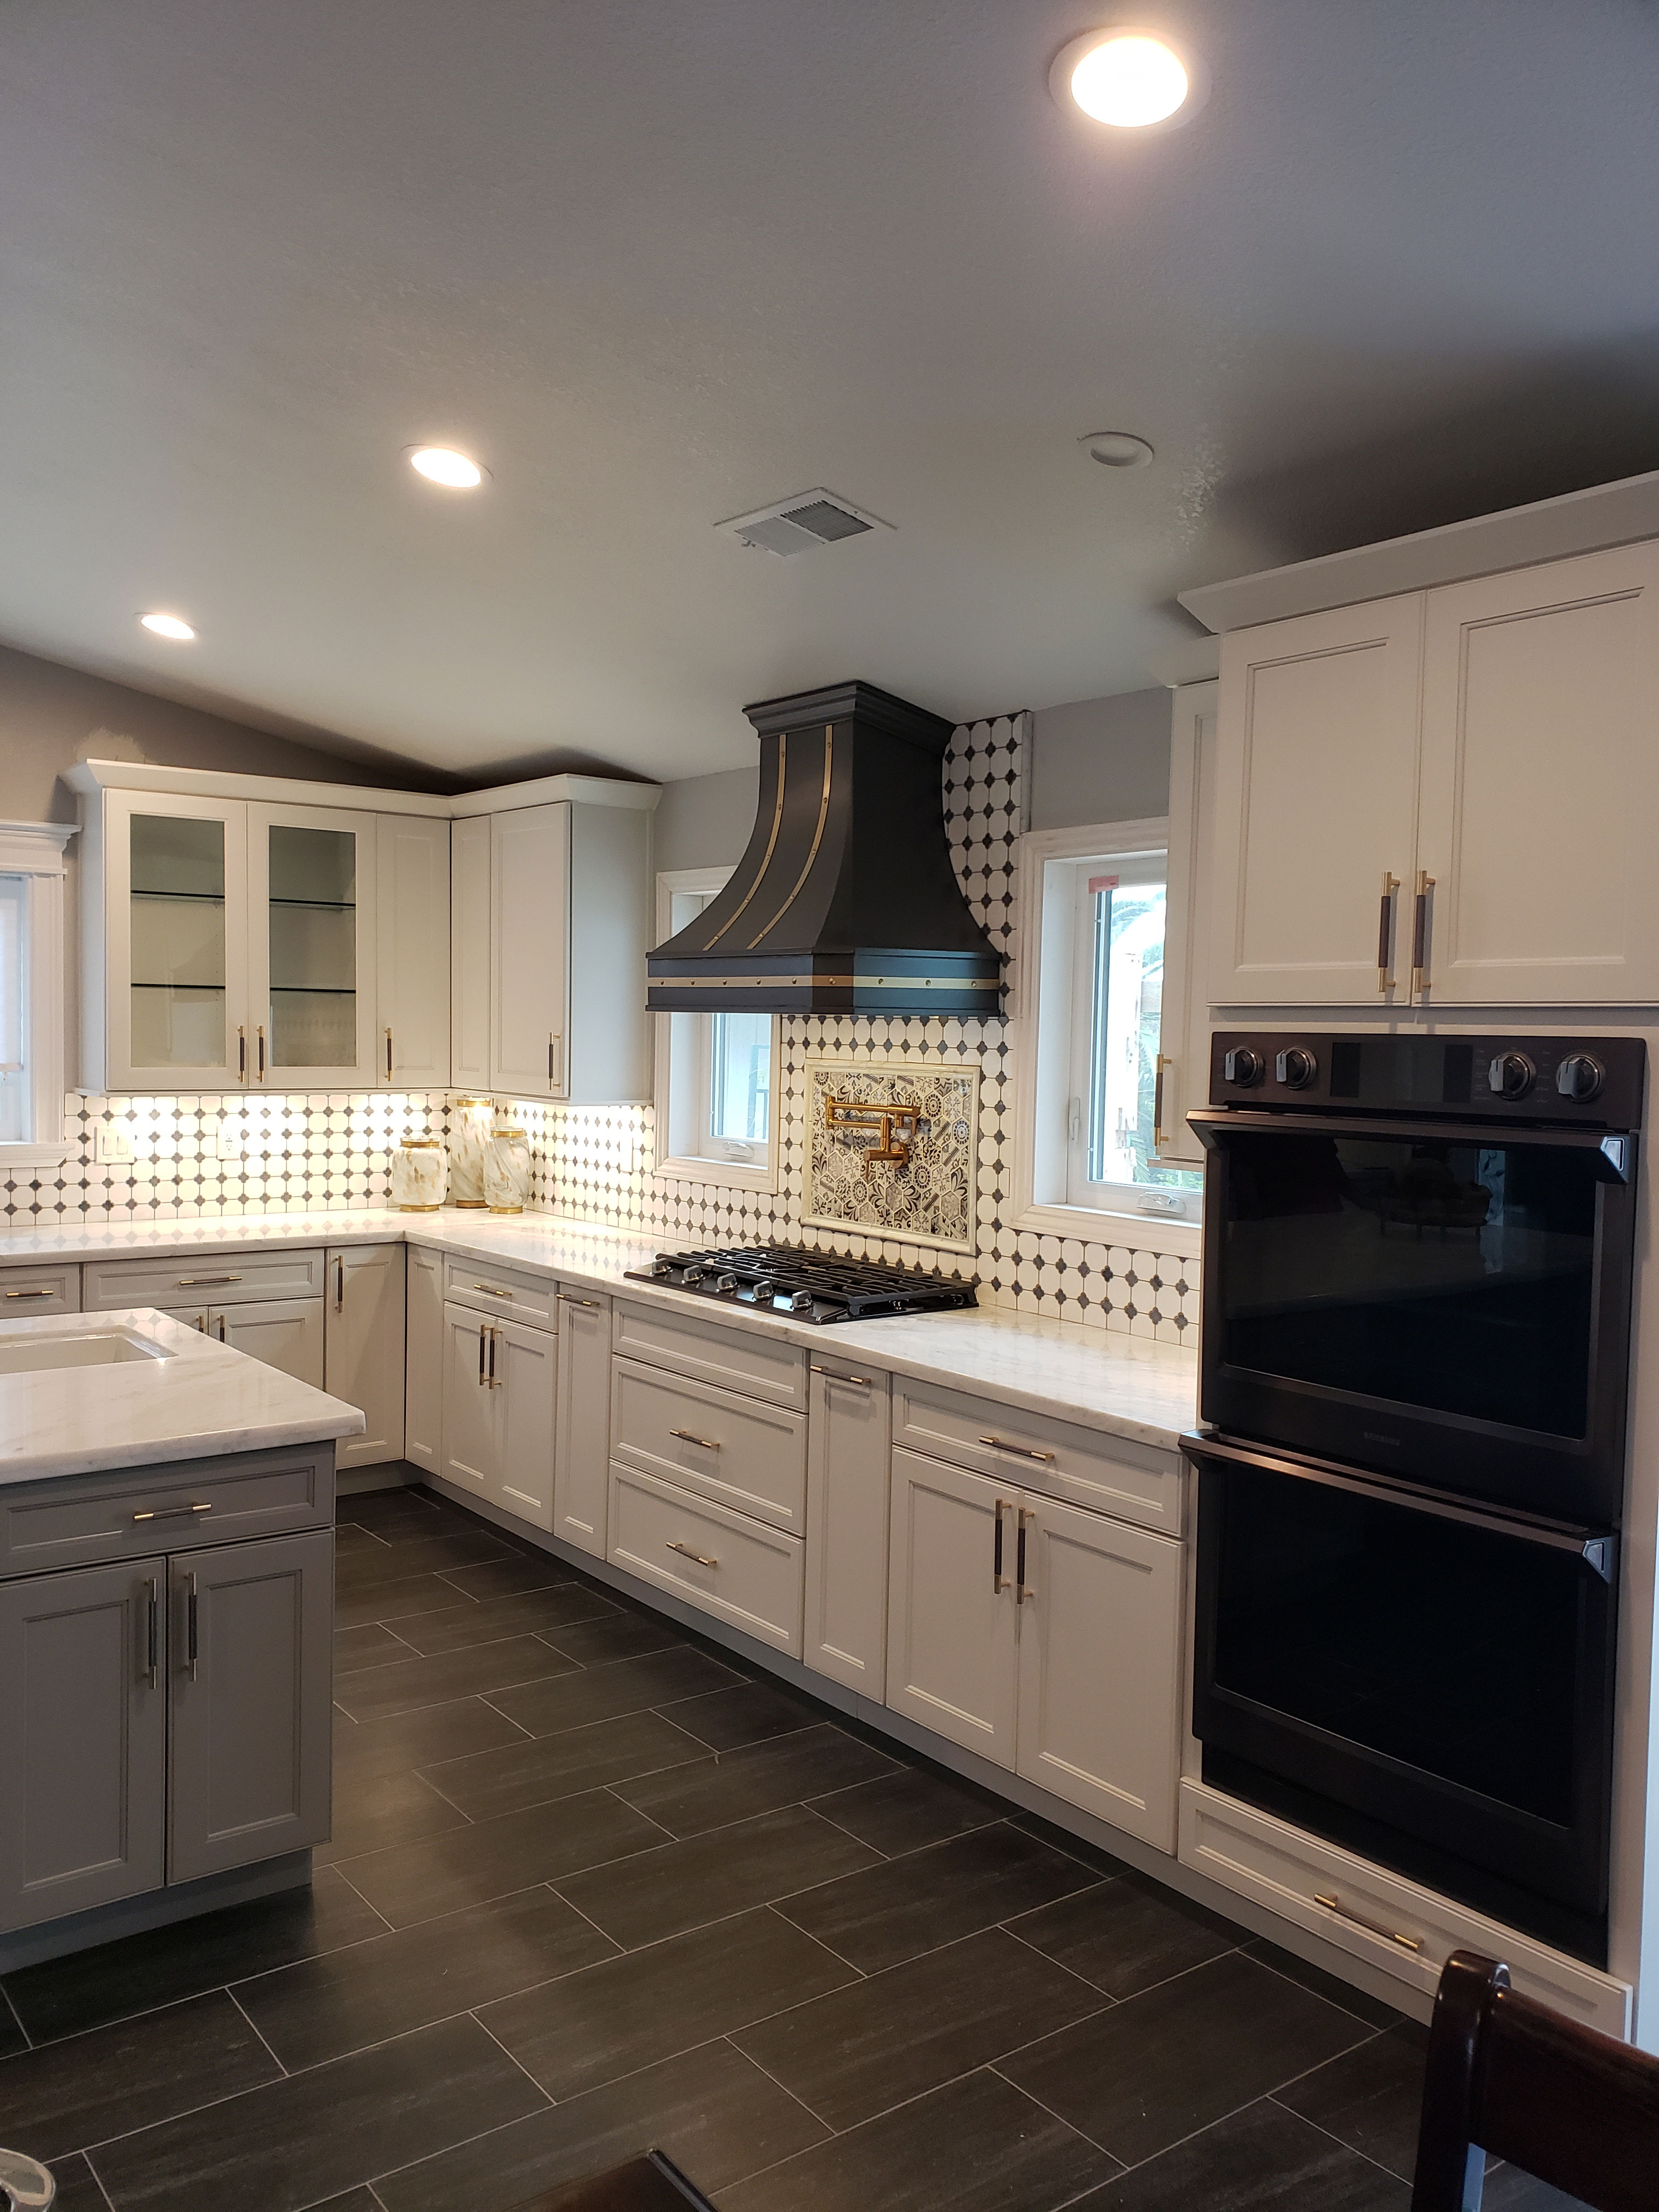 Black range hood in white kitchen with windows and checkered backsplash World CopperSmith